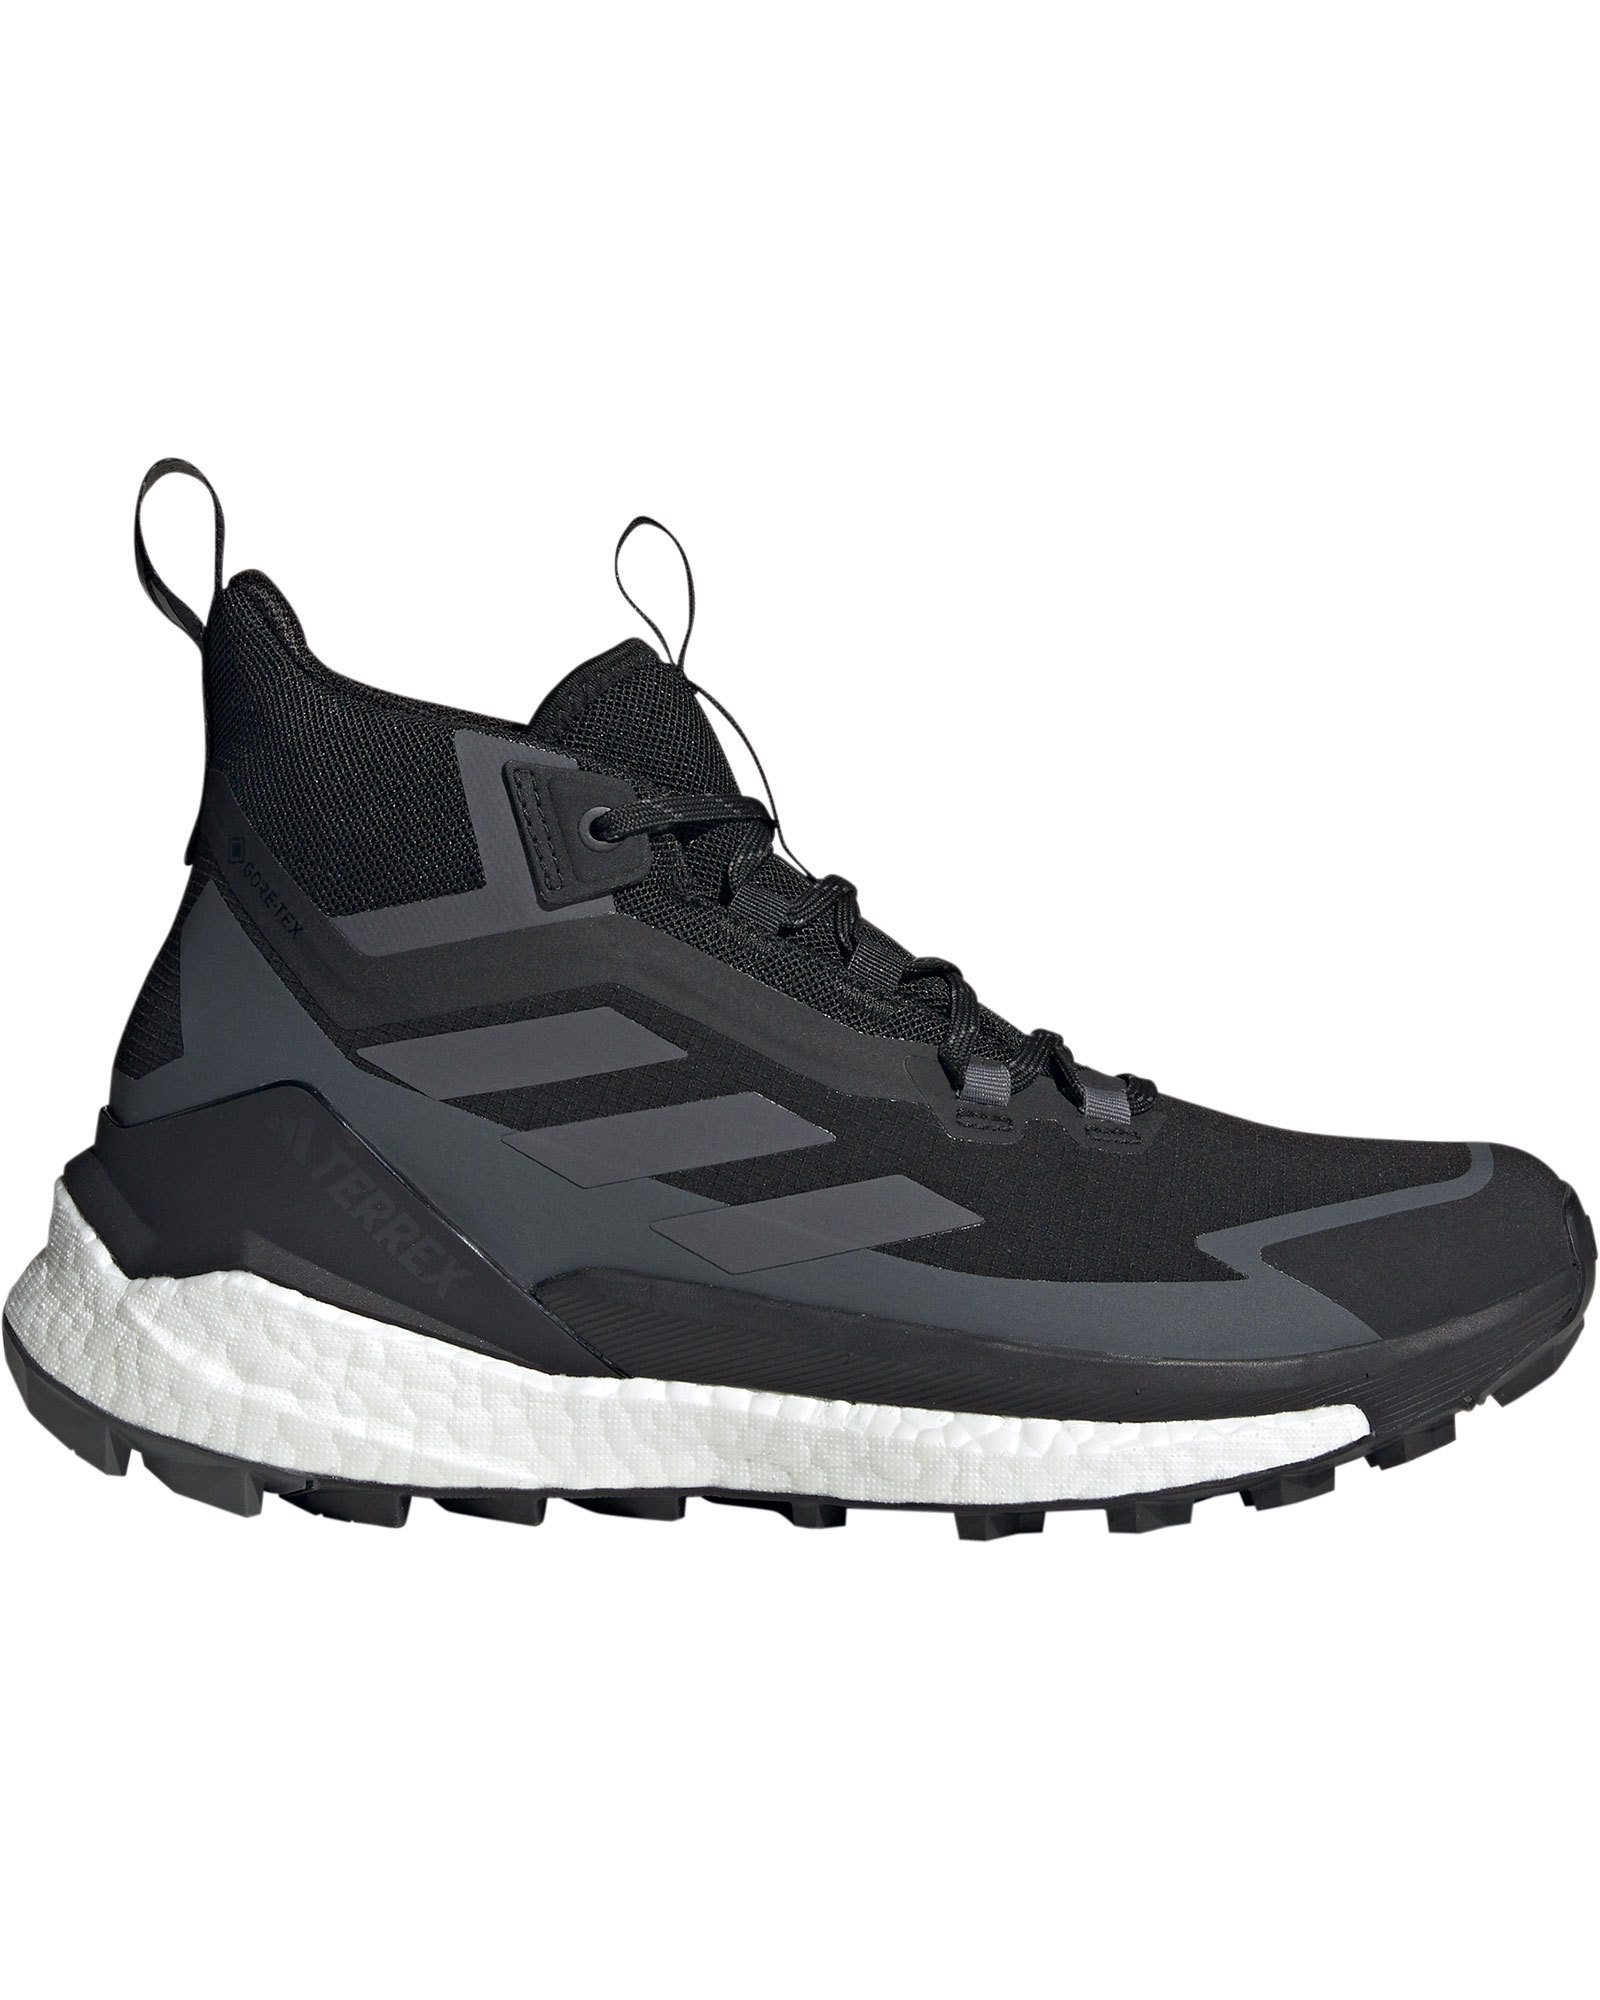 adidas TERREX Free Hiker 2 GORE TEX Men’s Boots - Core Black/Grey Six/Grey Three UK 10.5